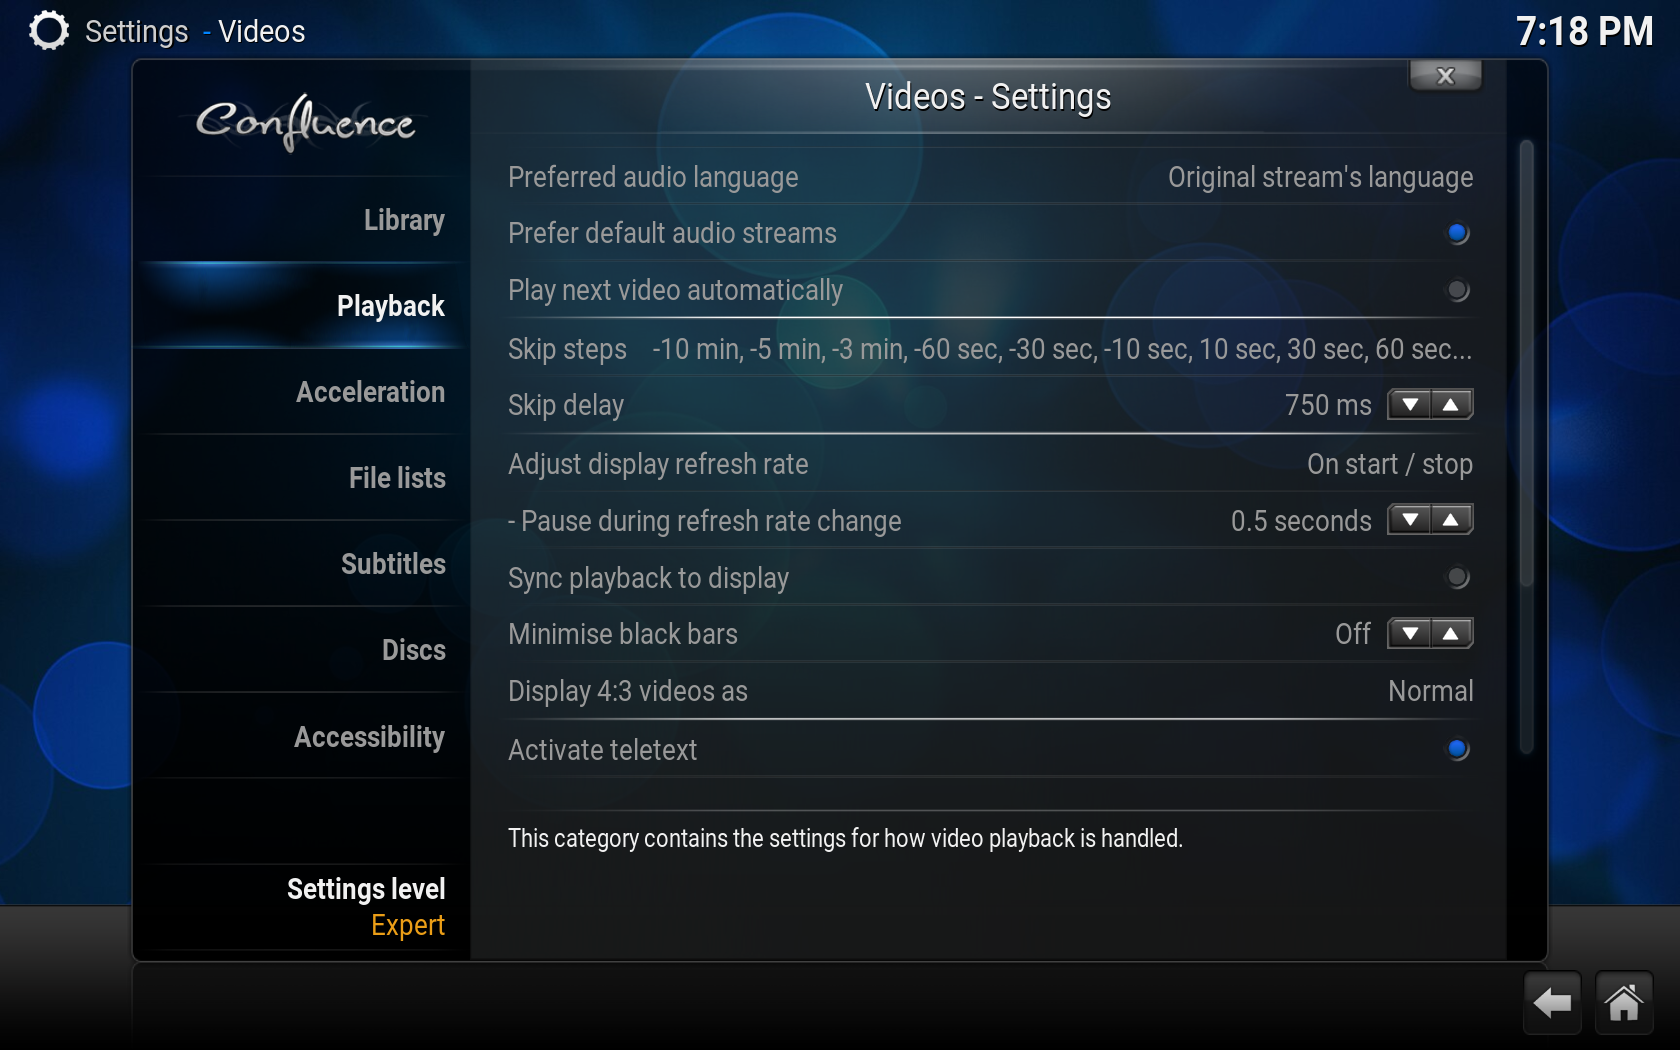 ChromeBox Settings: Video/Playback